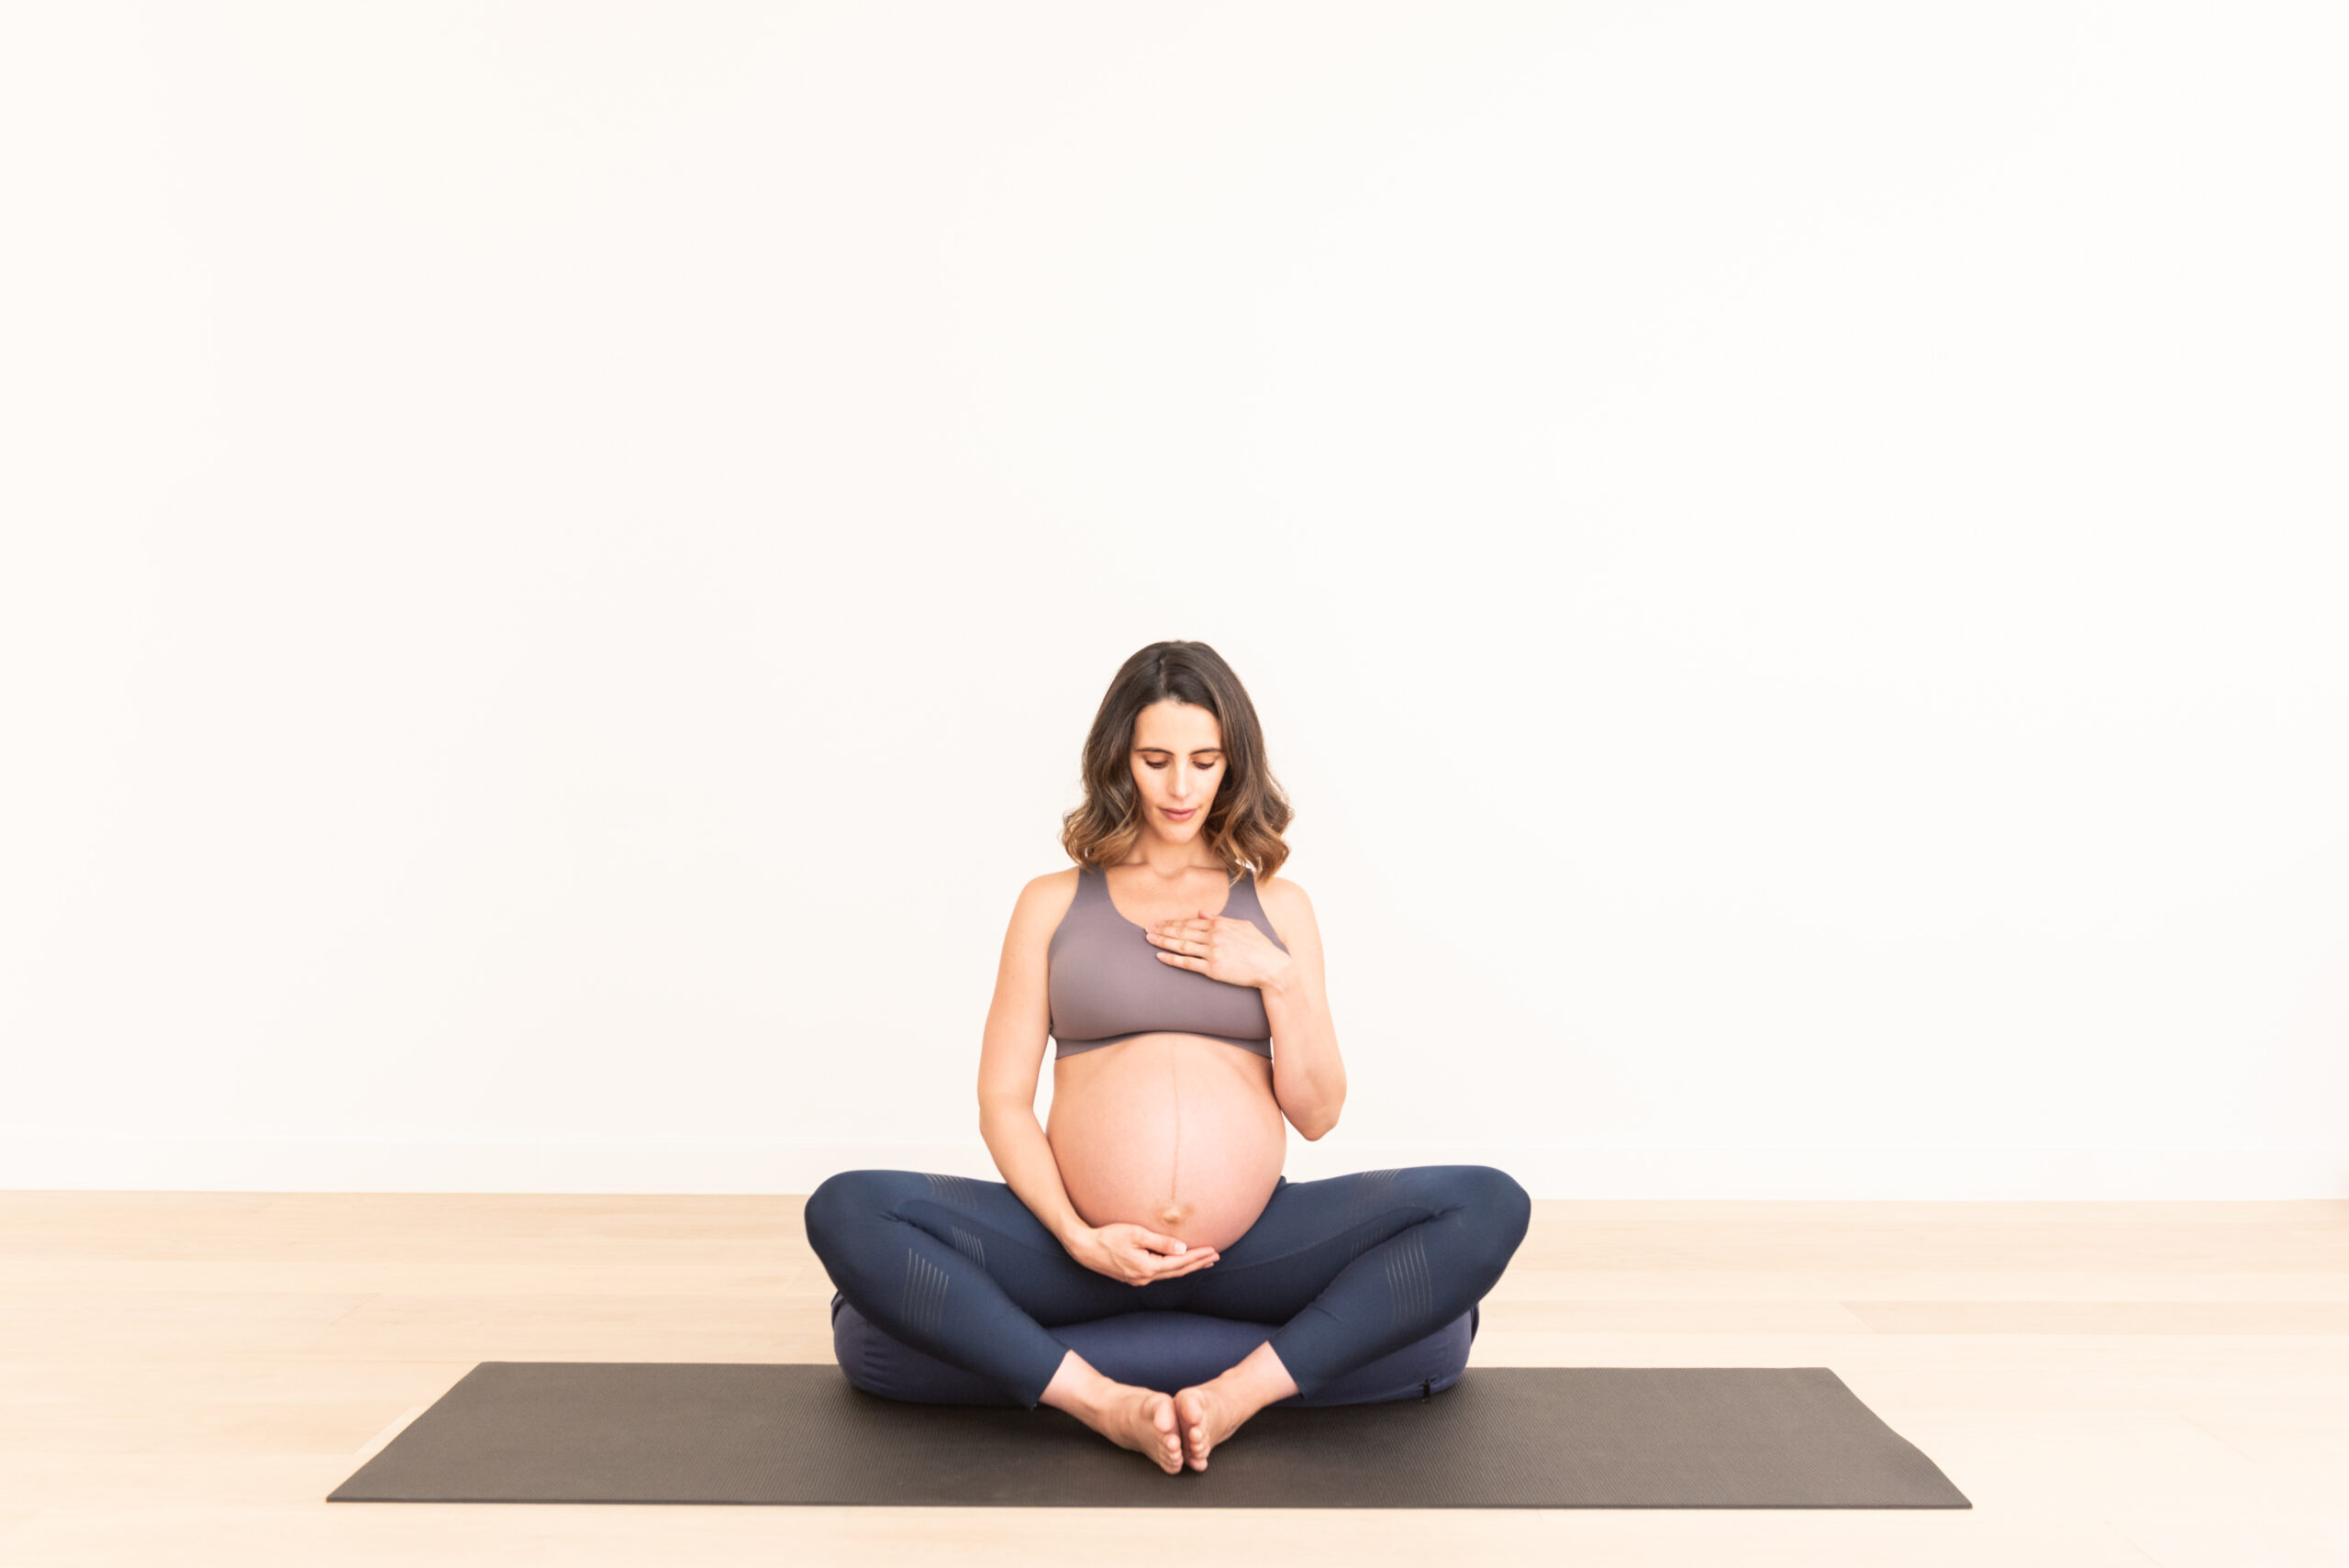 Top 5 Benefits of Prenatal Yoga Online During Covid-19